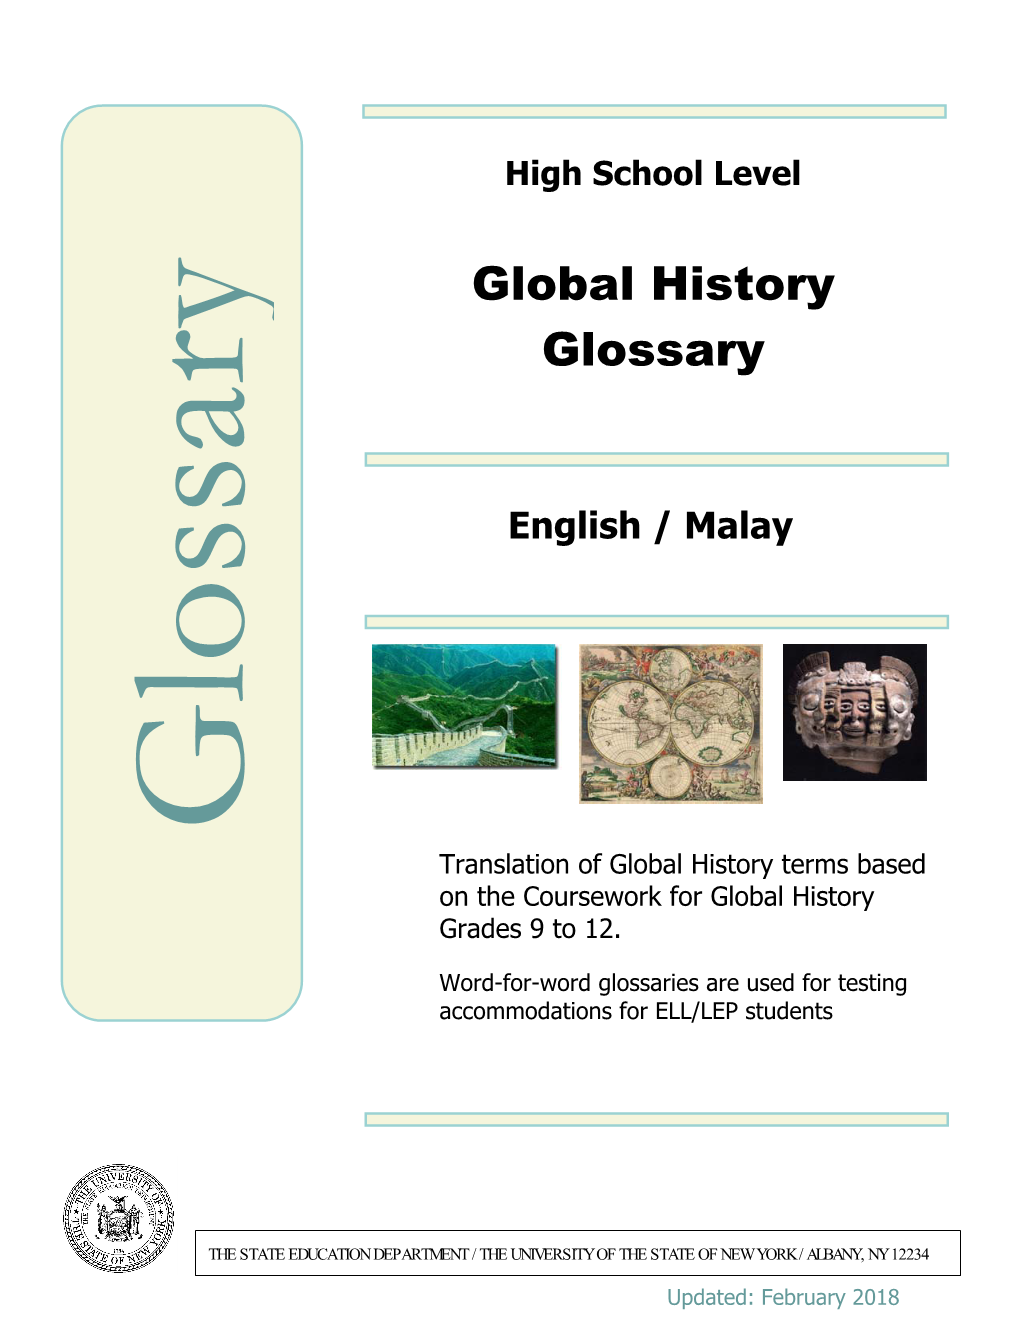 Global History Glossary – High School Level